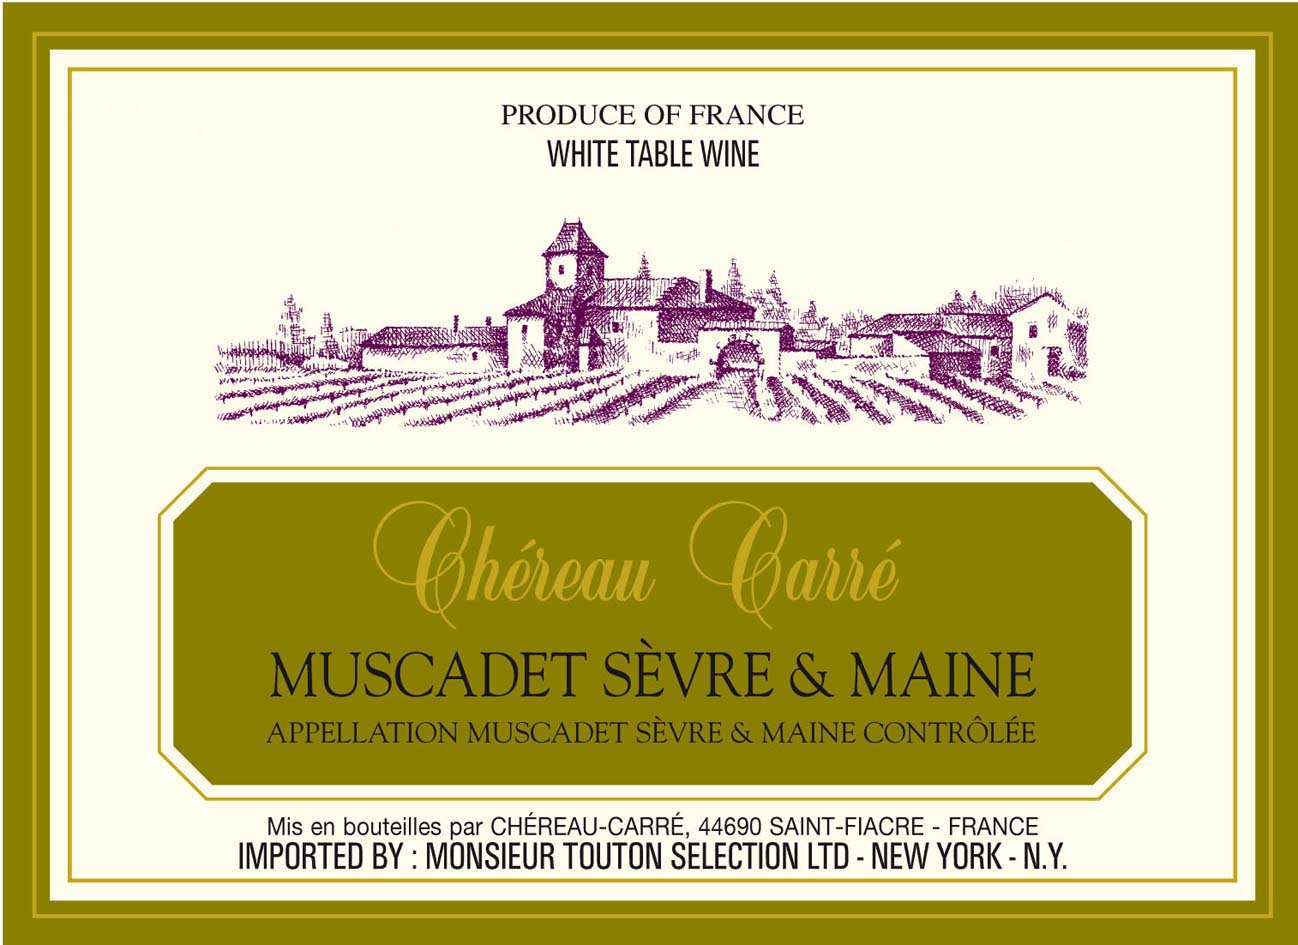 Chereau Carre Muscadet Sevre & Maine label